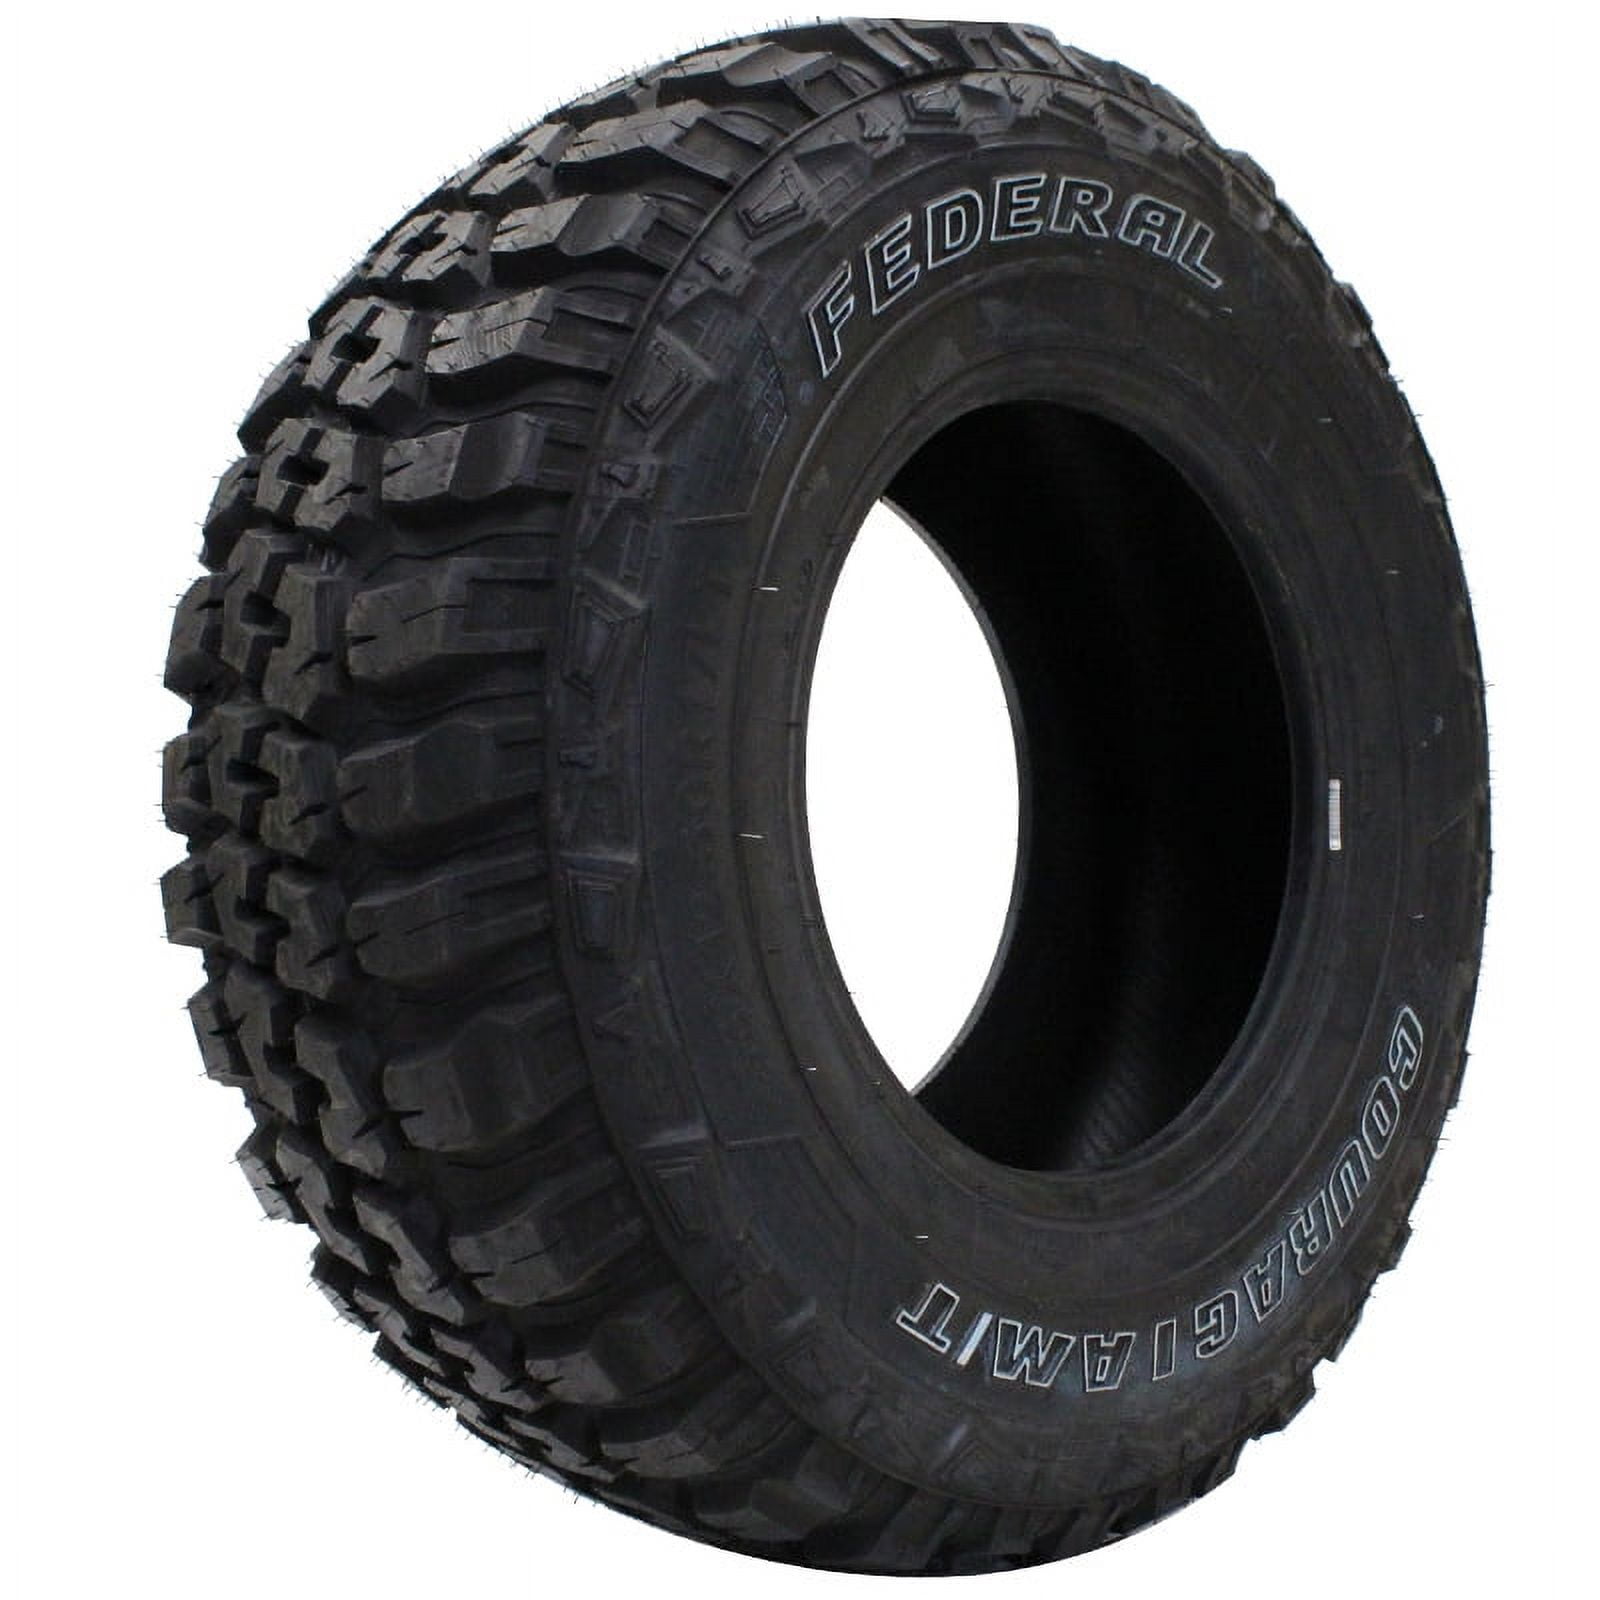 Federal Couragia M/T Mud-Terrain Tire - 37X12.50R18 LRE 10PLY